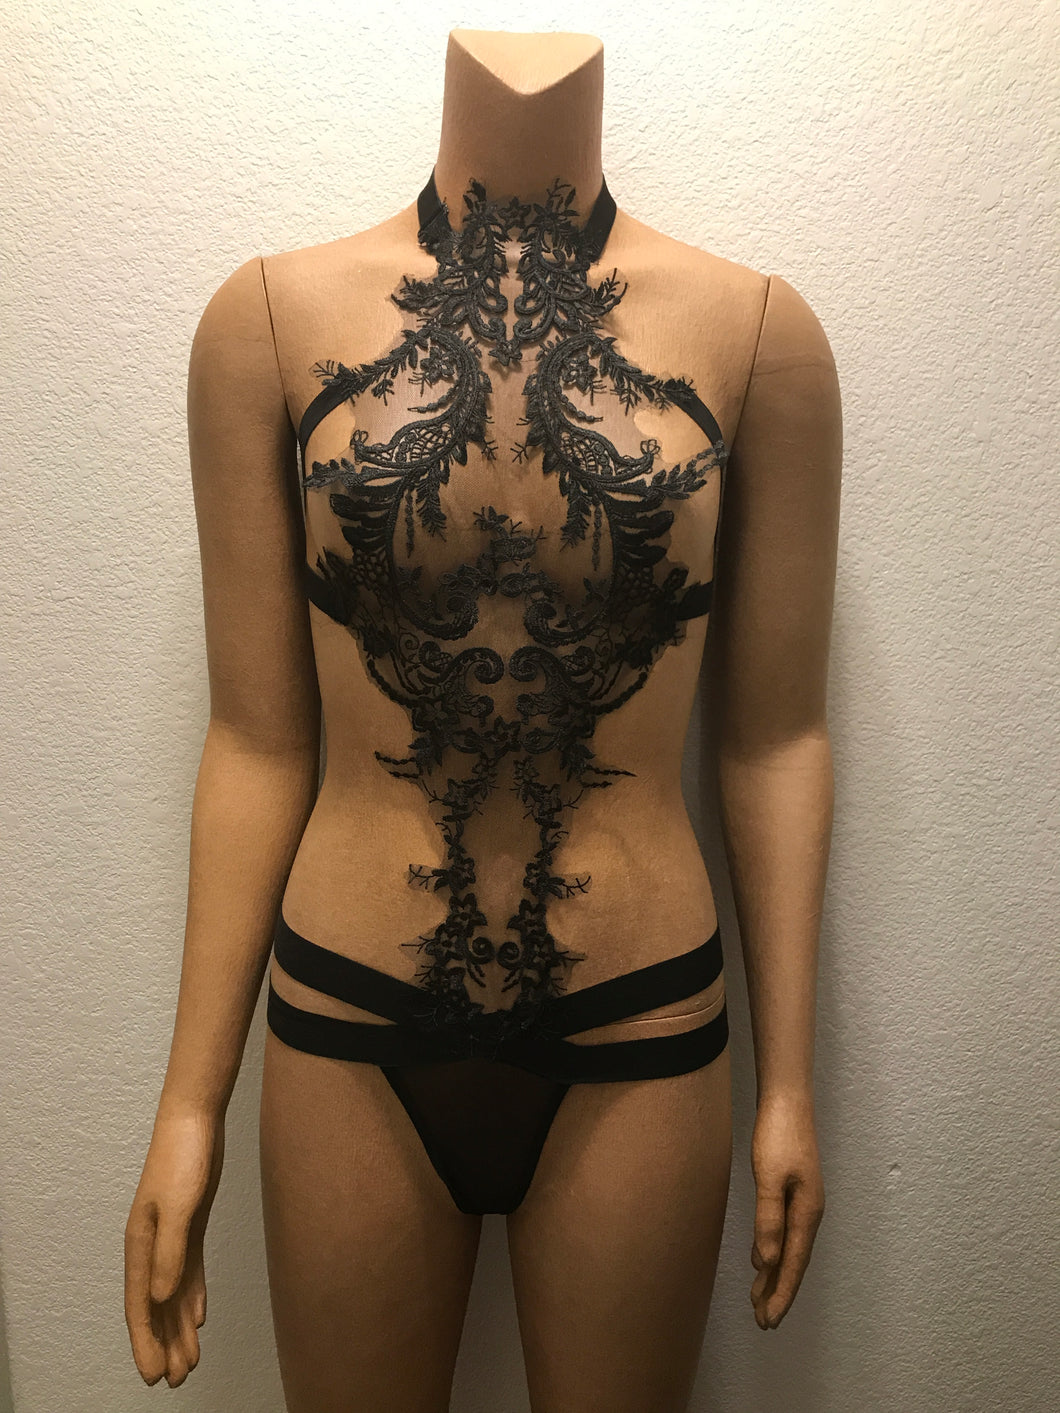 Elegant Black Lace Full Body Cage Harness